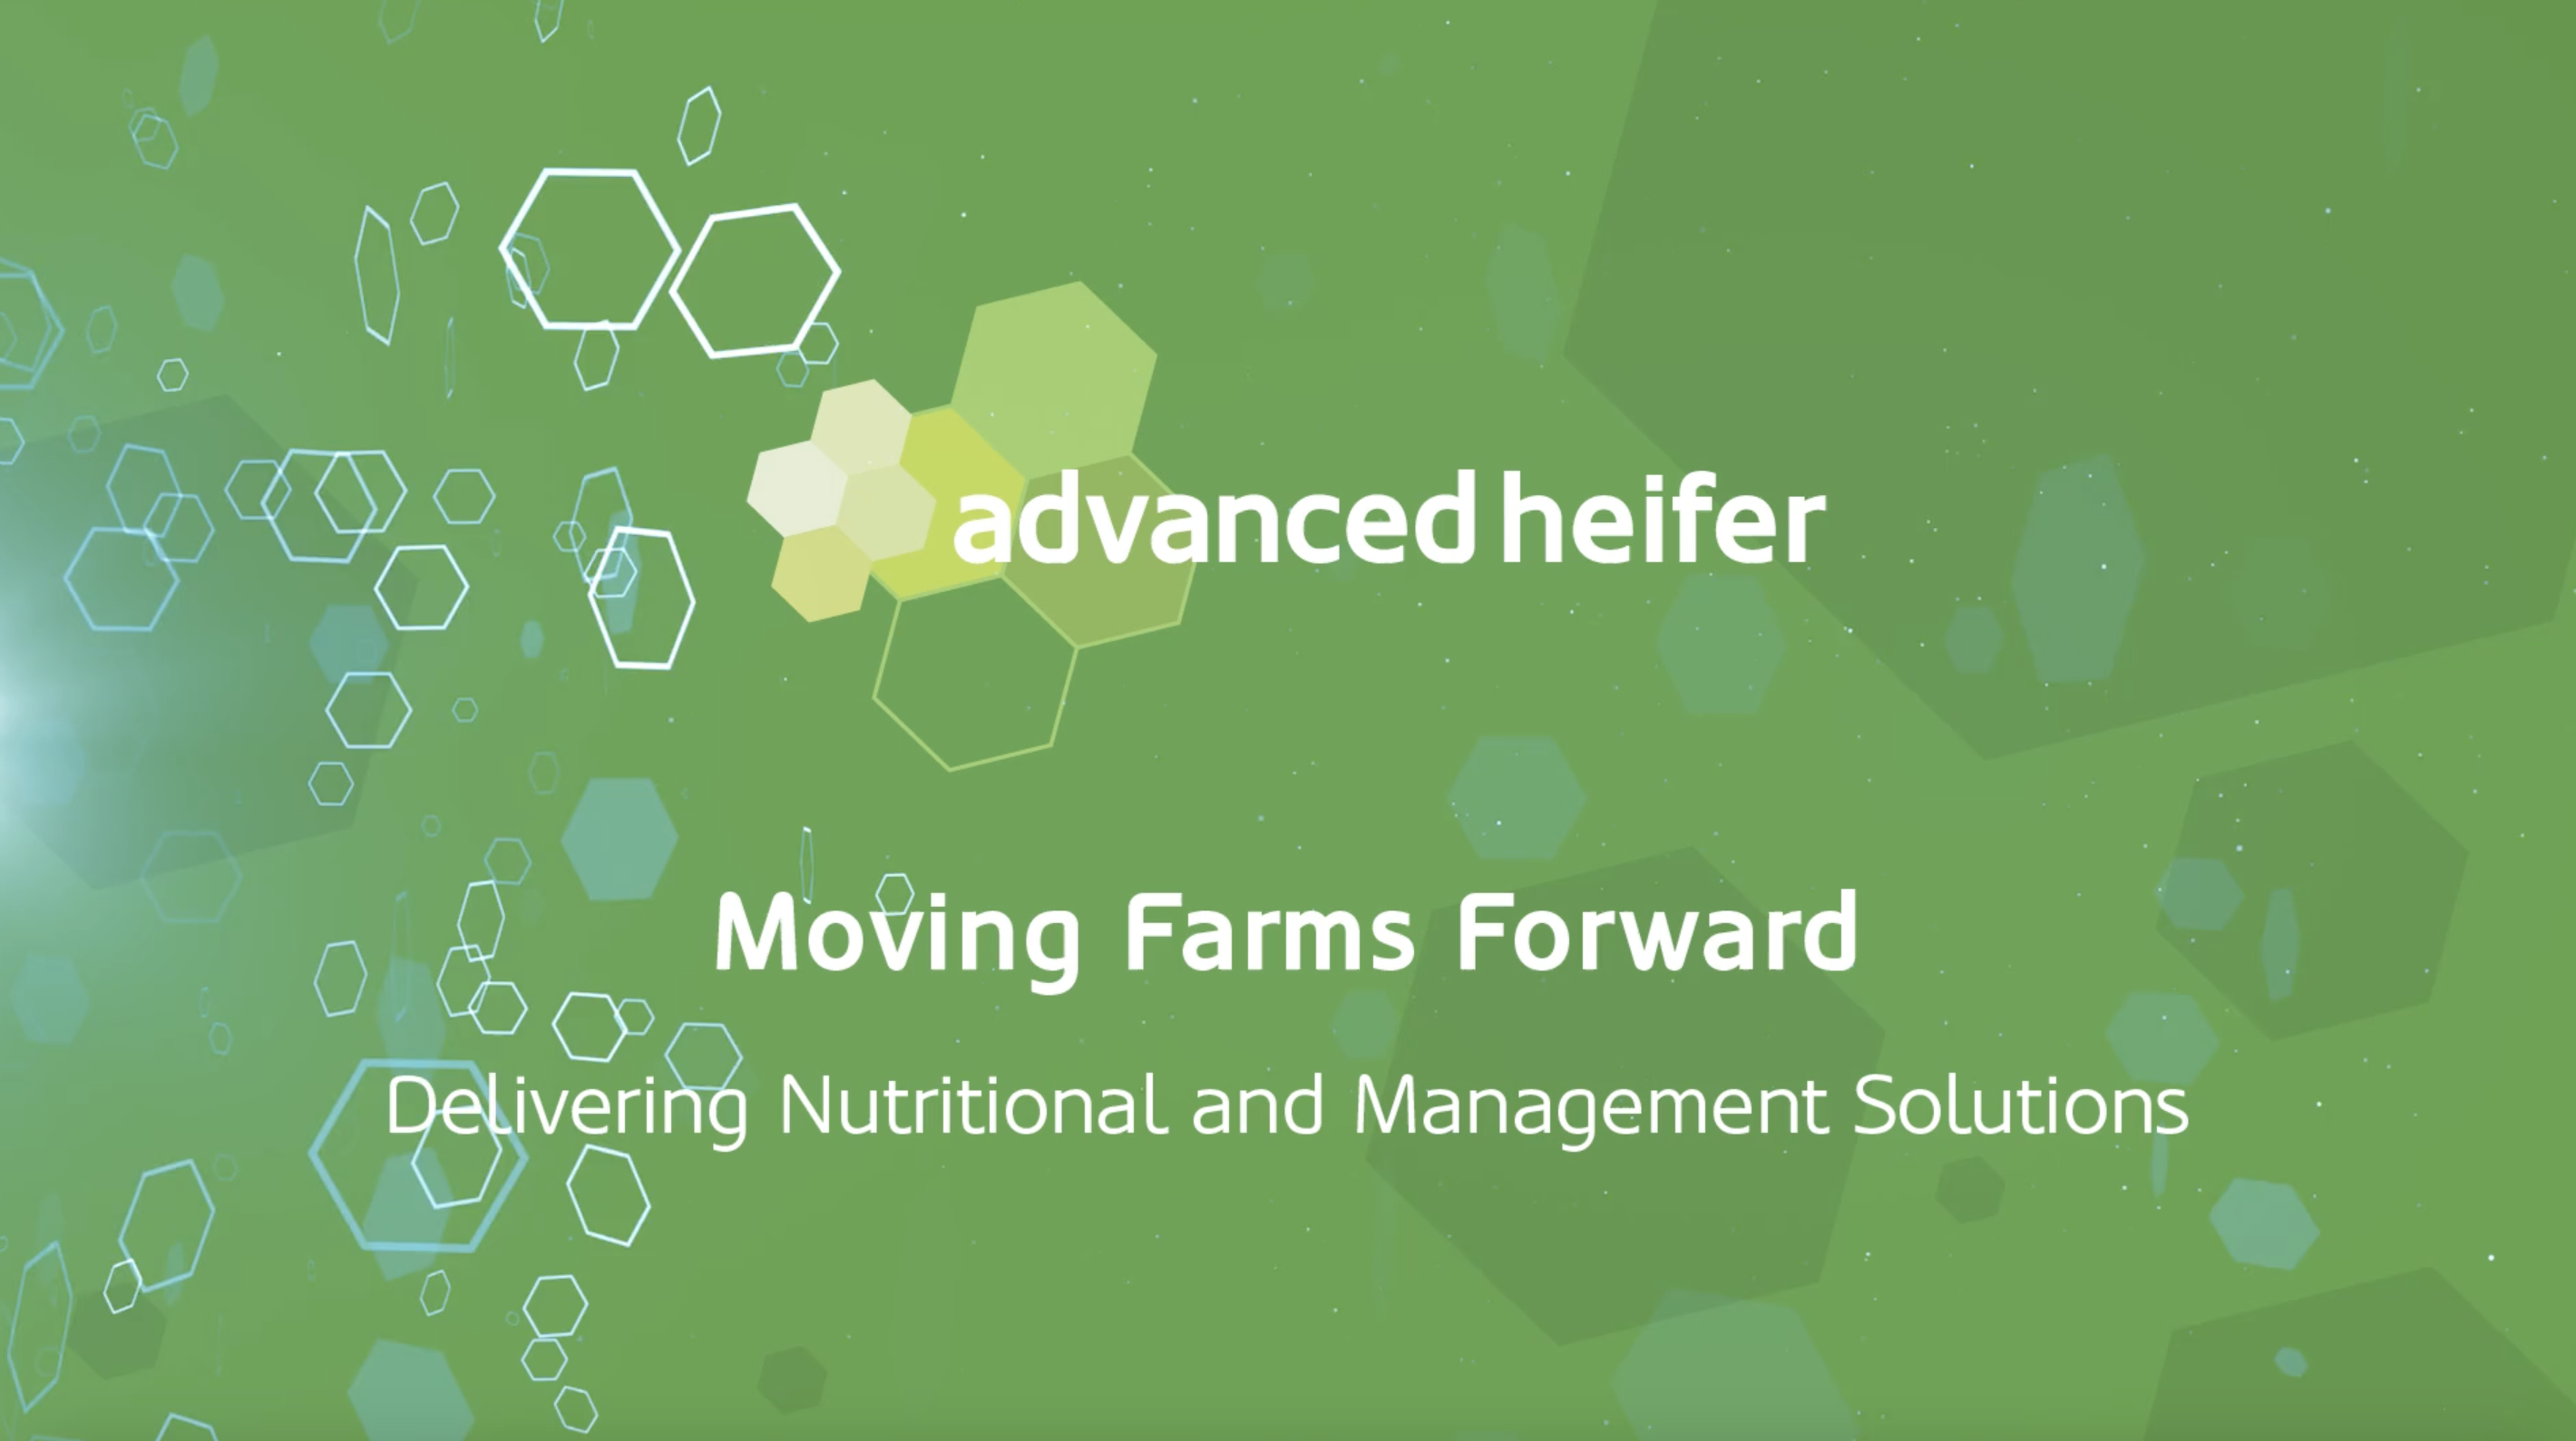 Watch the advanced heifer video